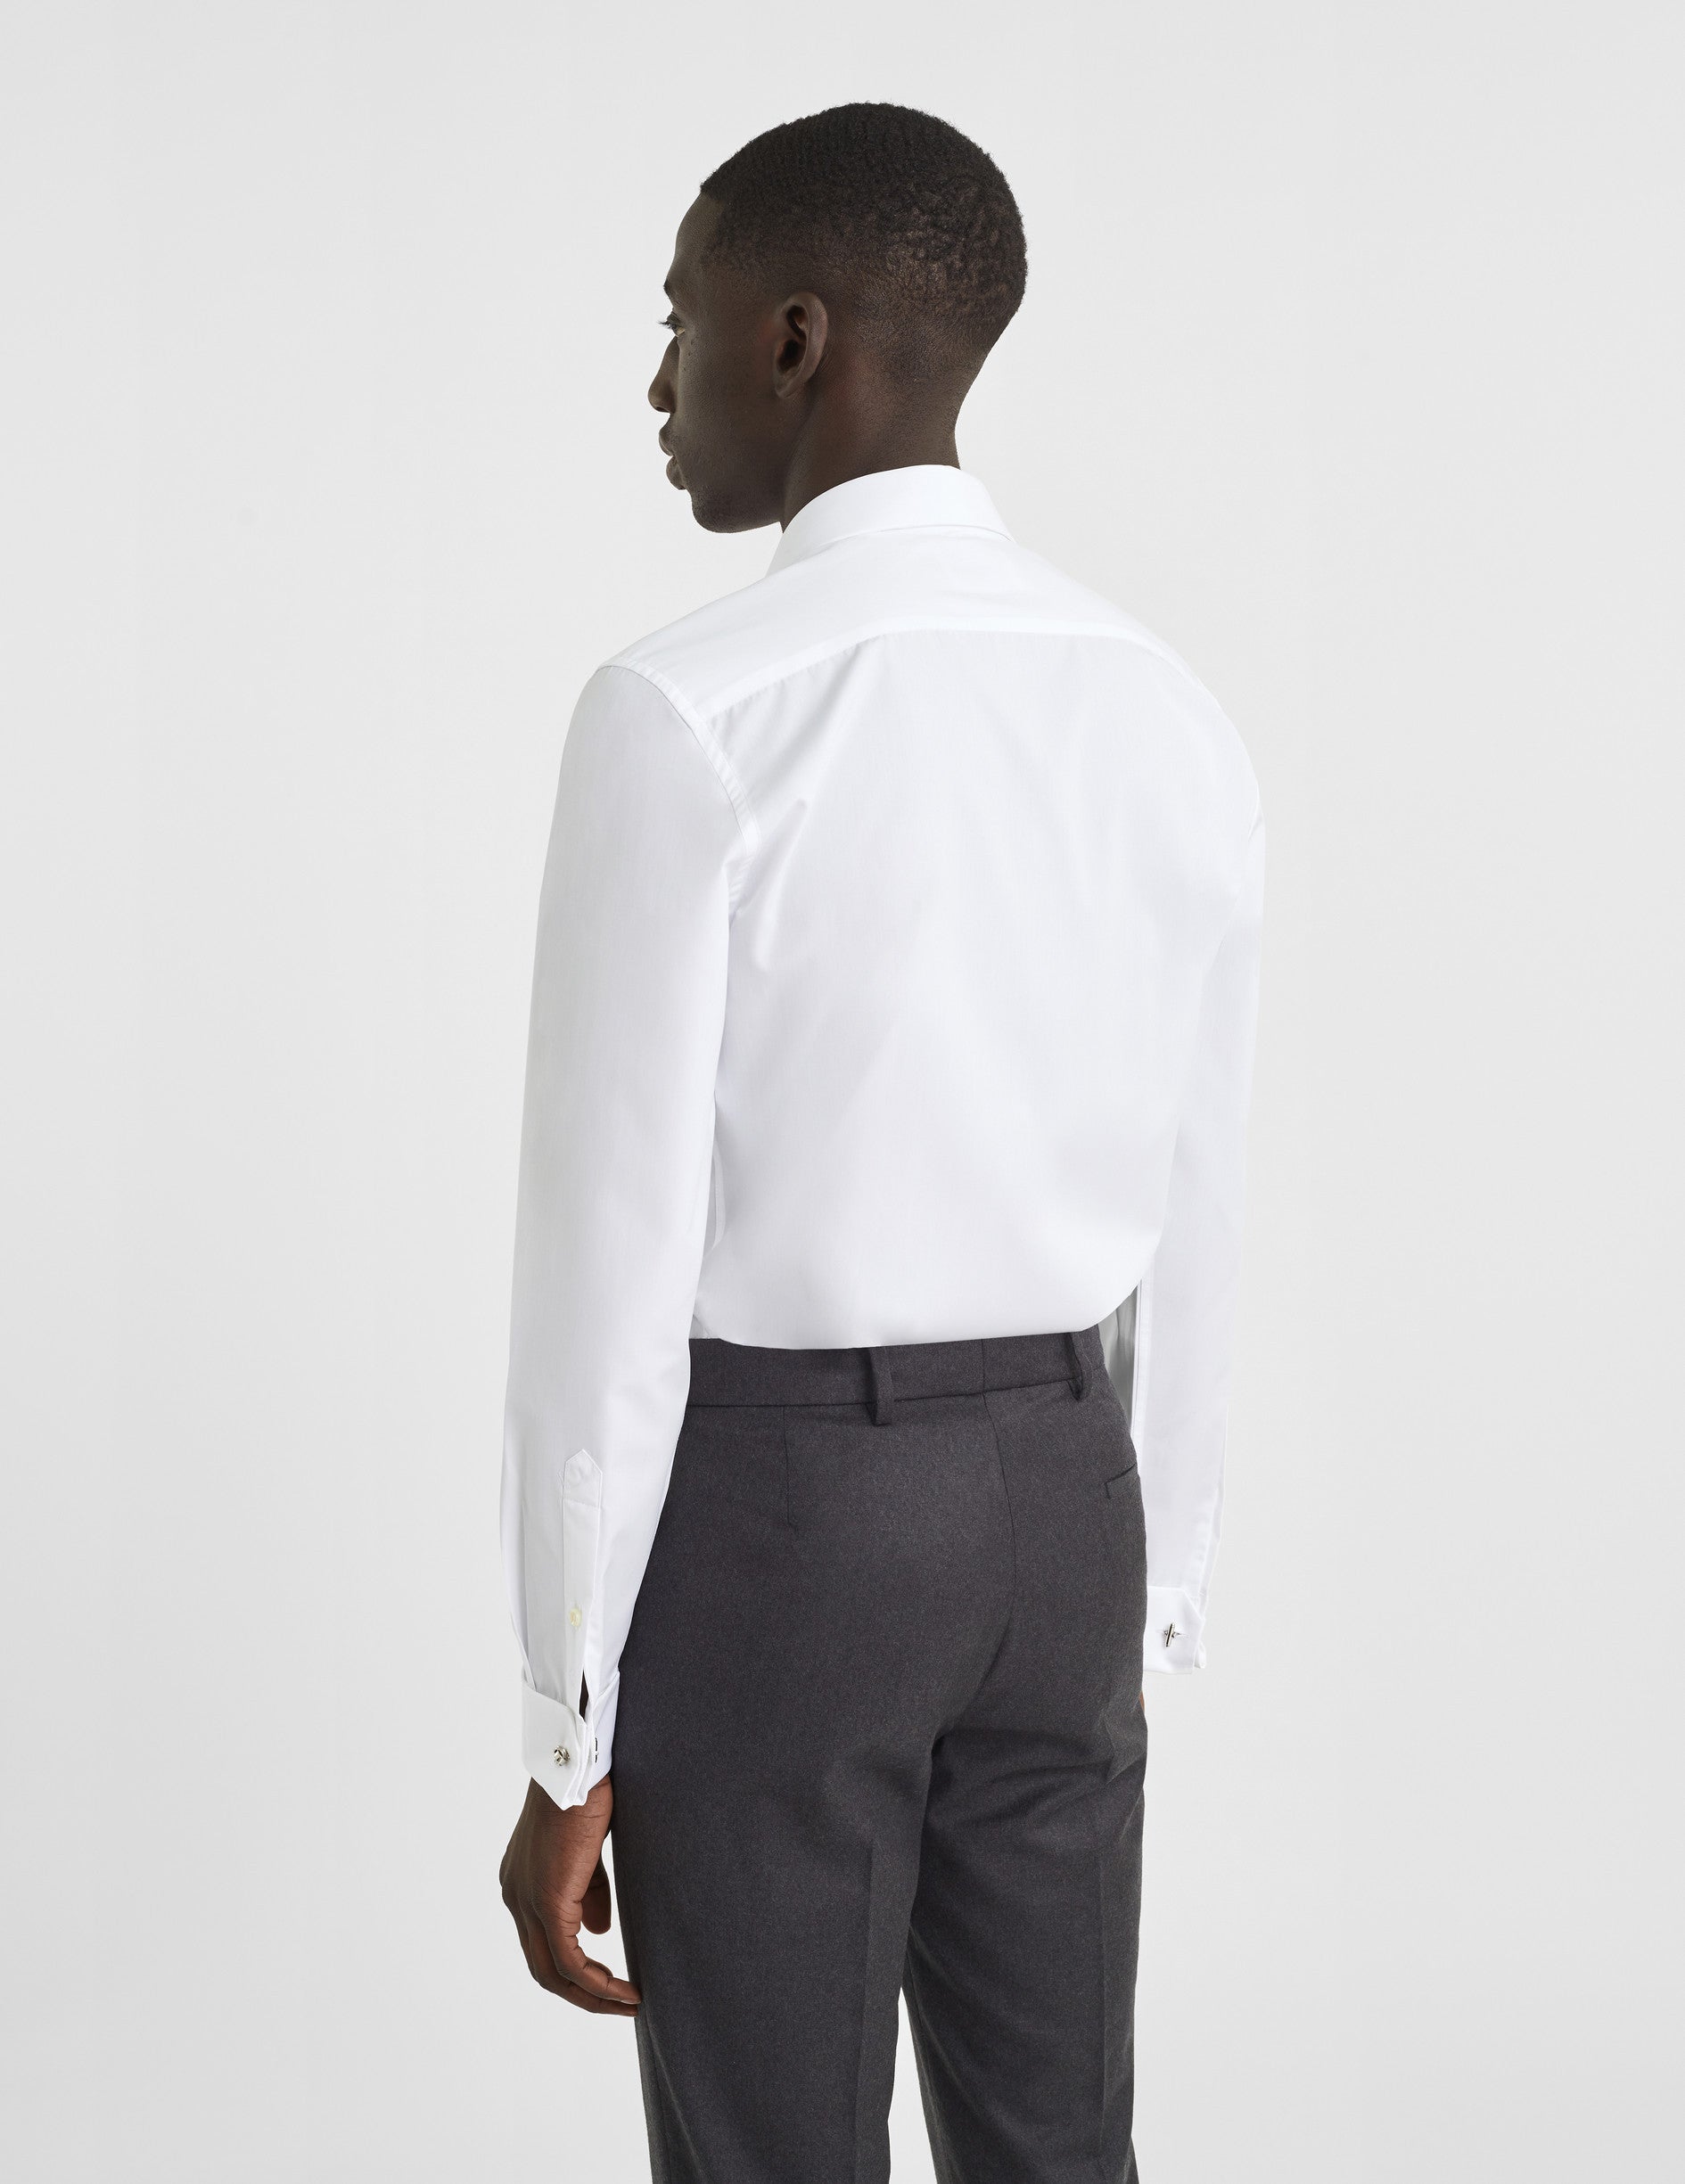 Fitted white shirt - Poplin - Italian Collar - French Cuffs